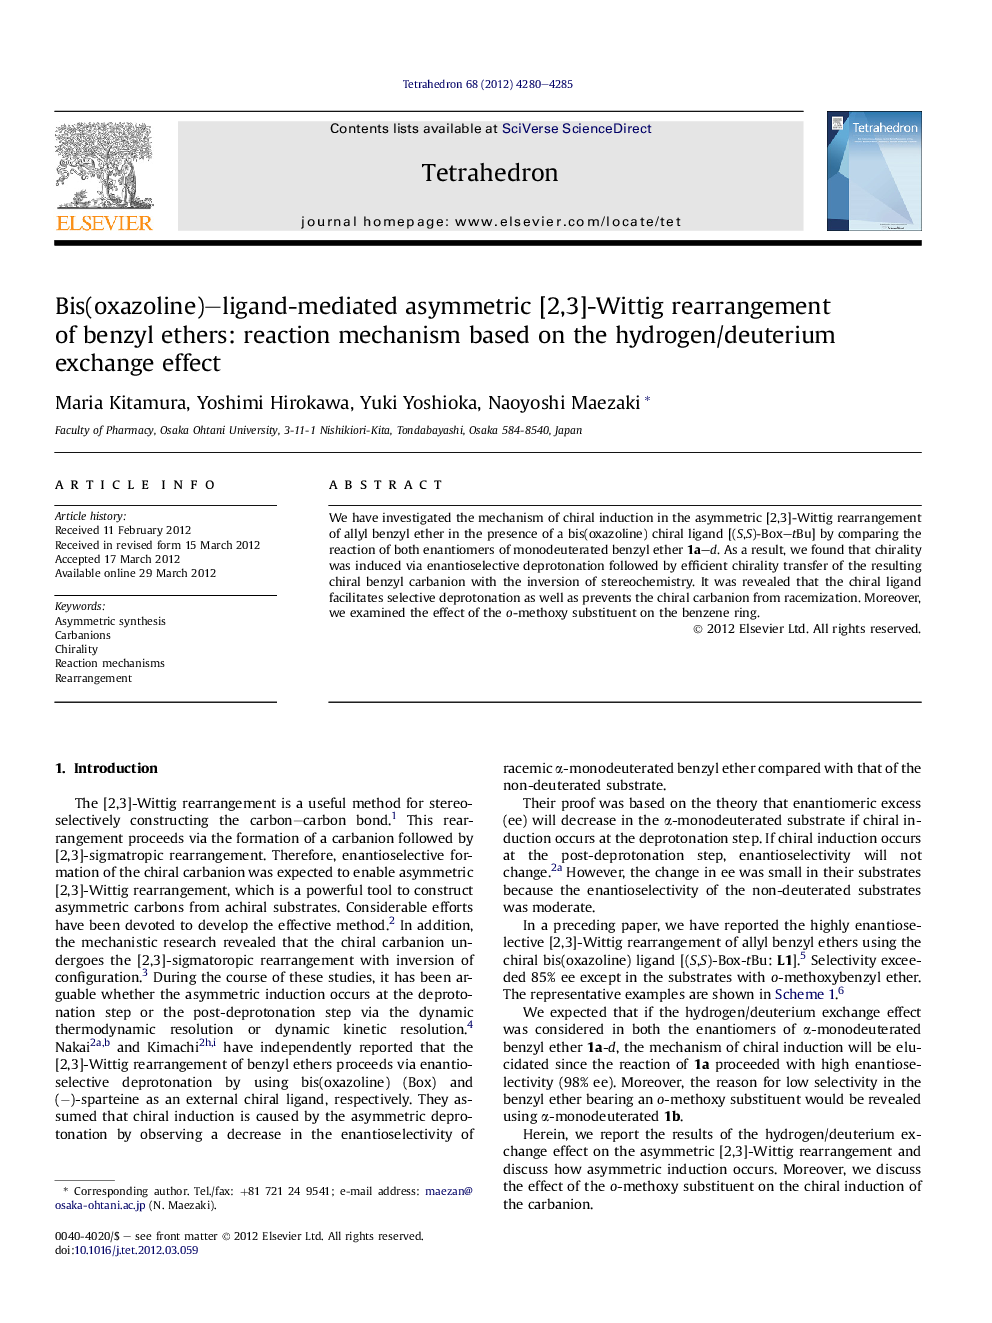 Bis(oxazoline)-ligand-mediated asymmetric [2,3]-Wittig rearrangement of benzyl ethers: reaction mechanism based on the hydrogen/deuterium exchange effect